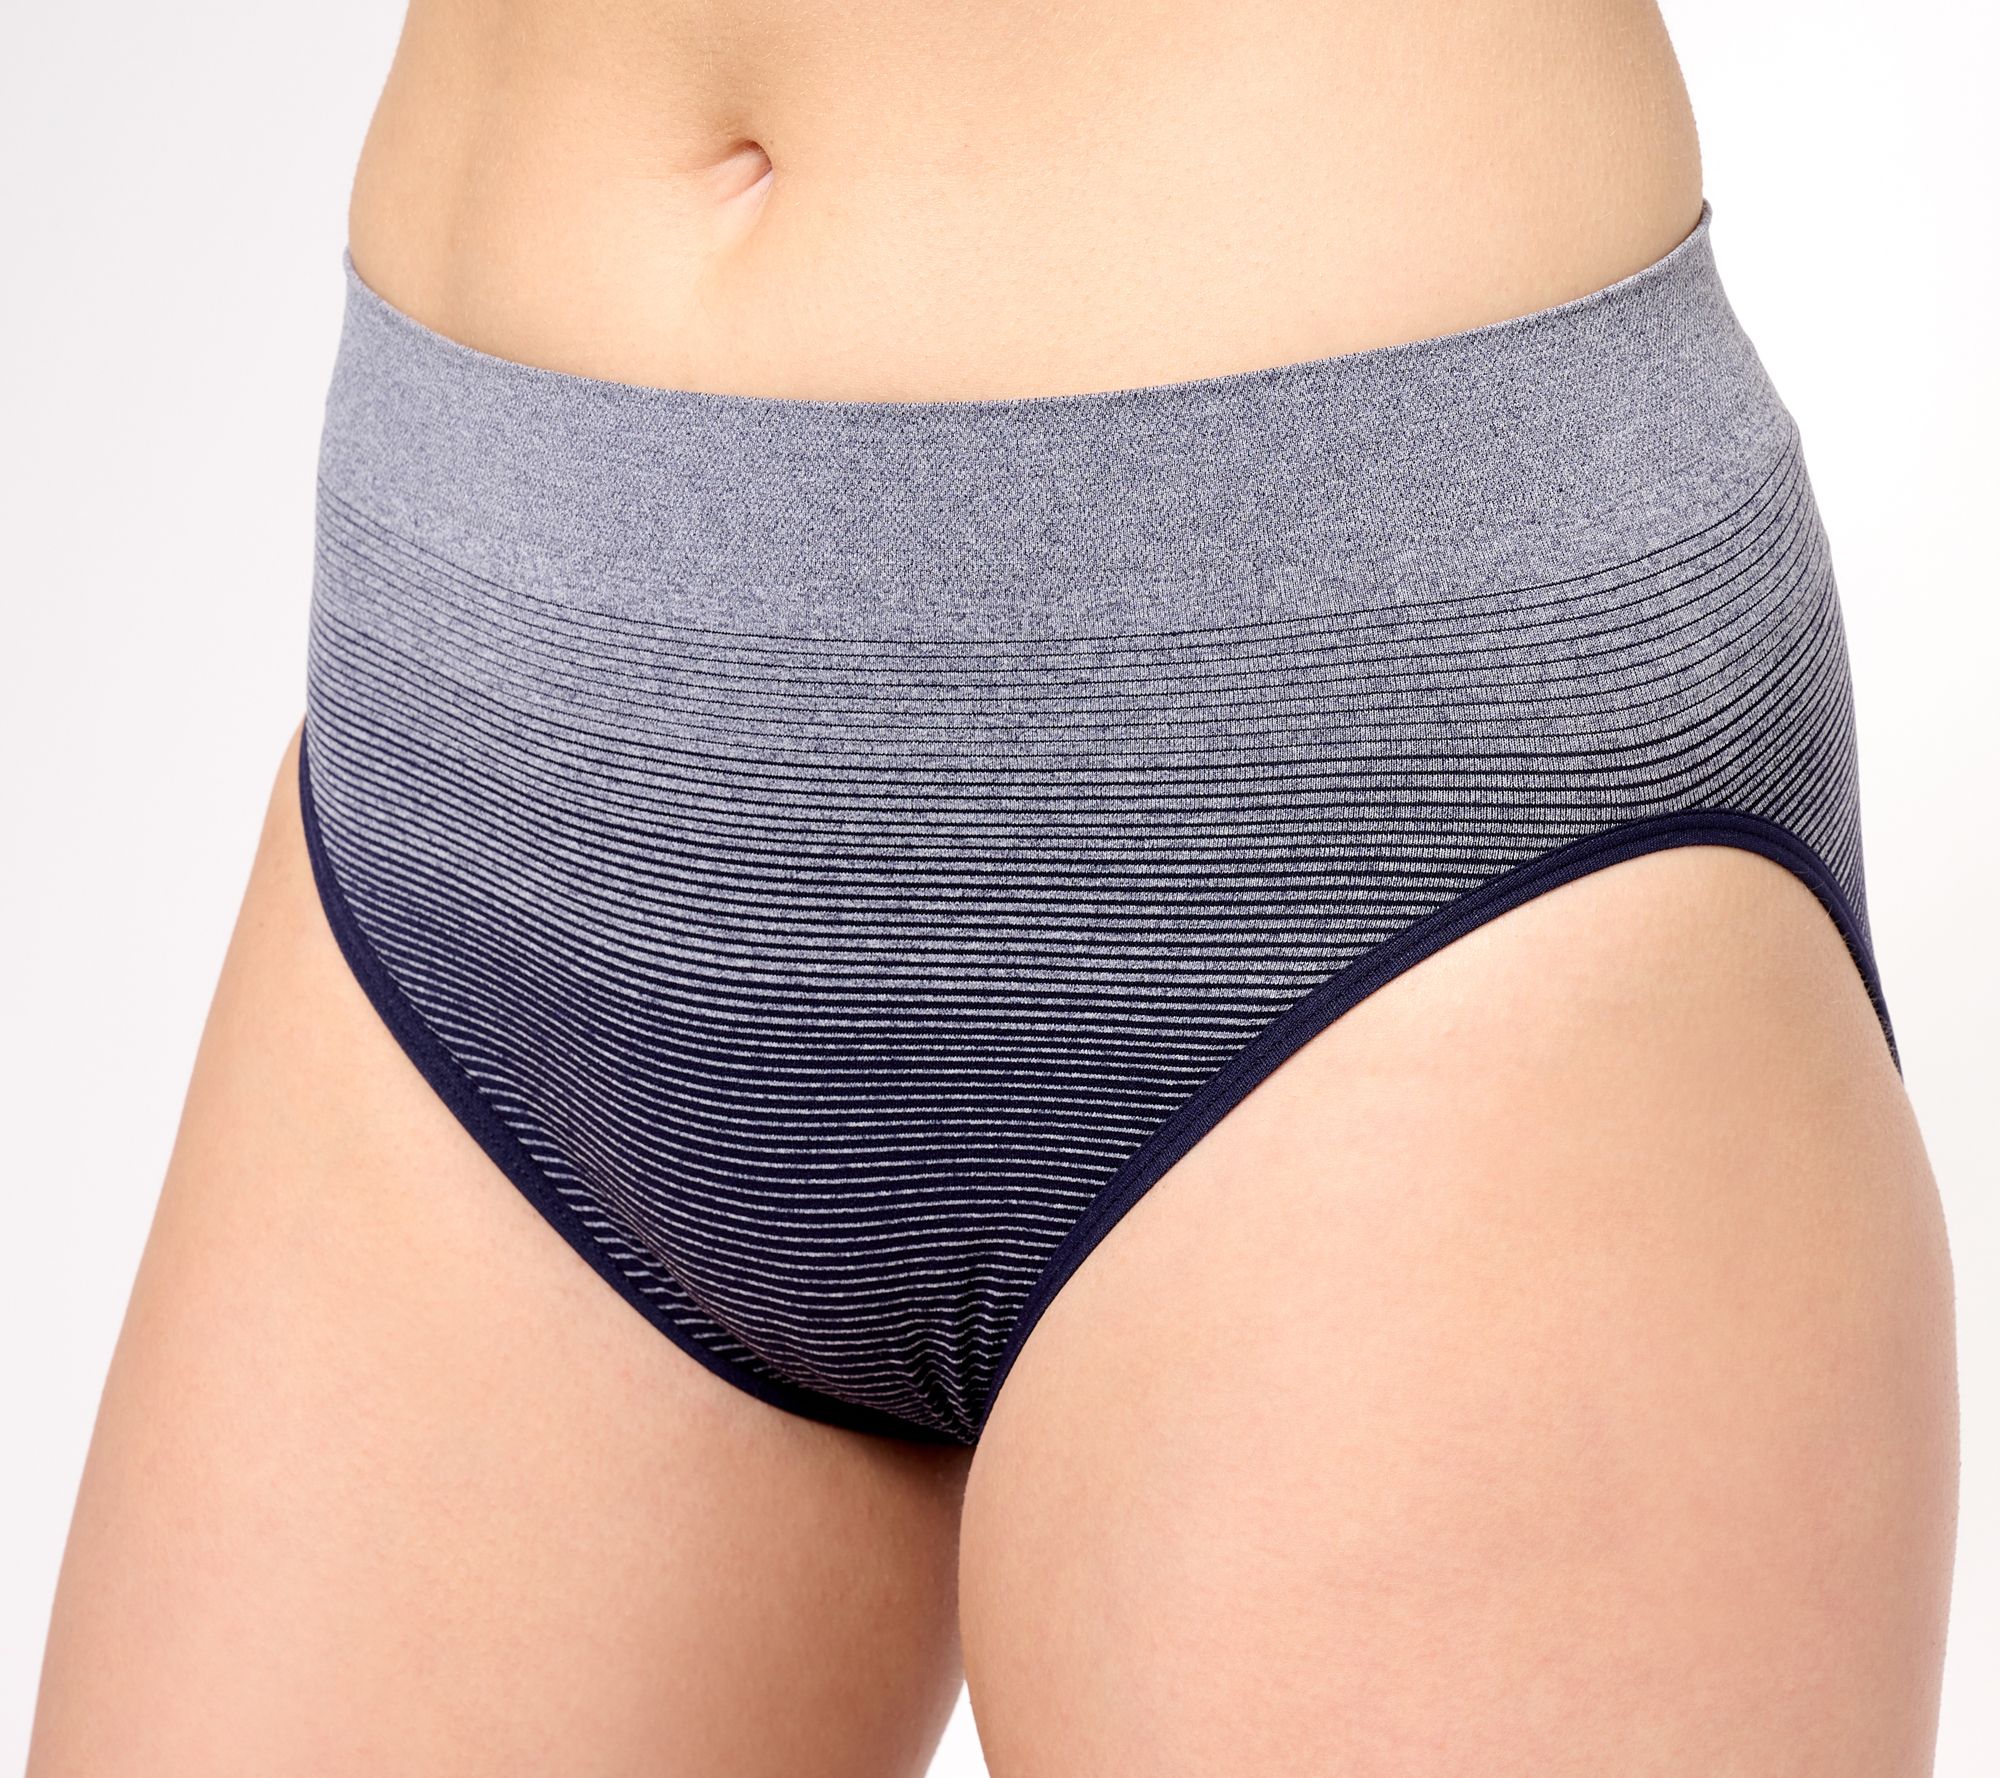 Hering Women's Cotton/Spandex Low Rise Hipster Panties Underwear